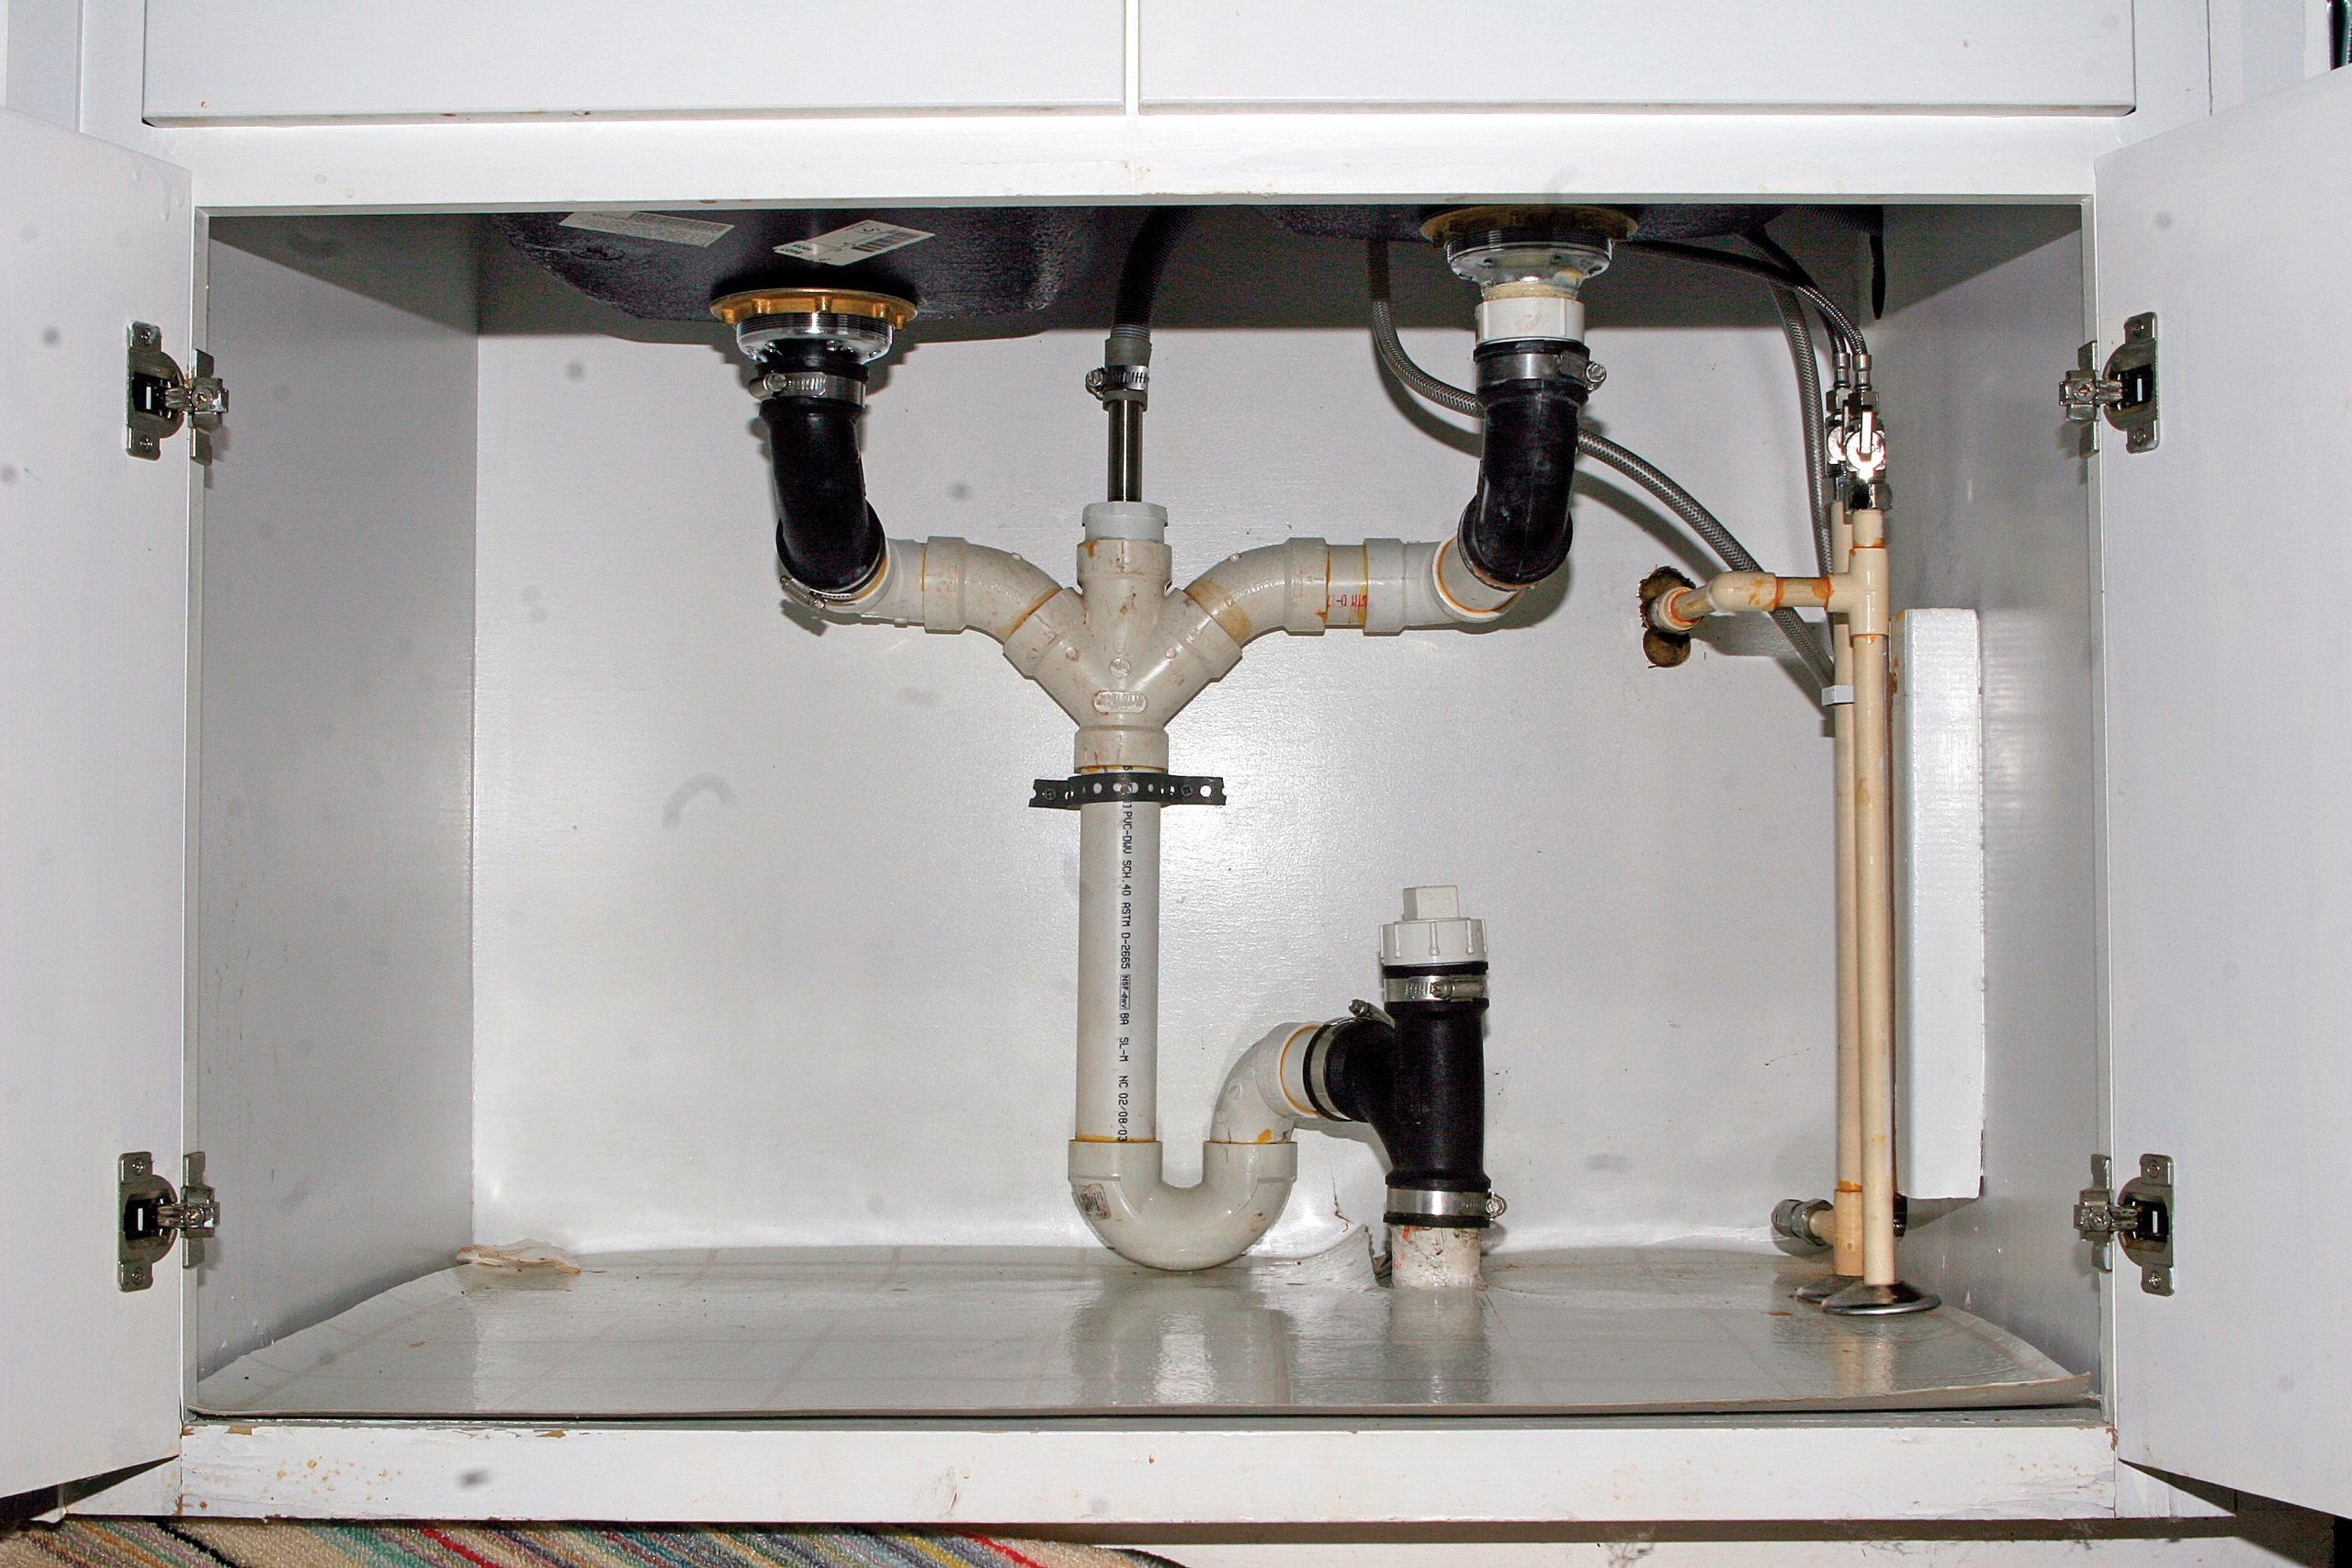 kitchen sink drain underneath corrosion